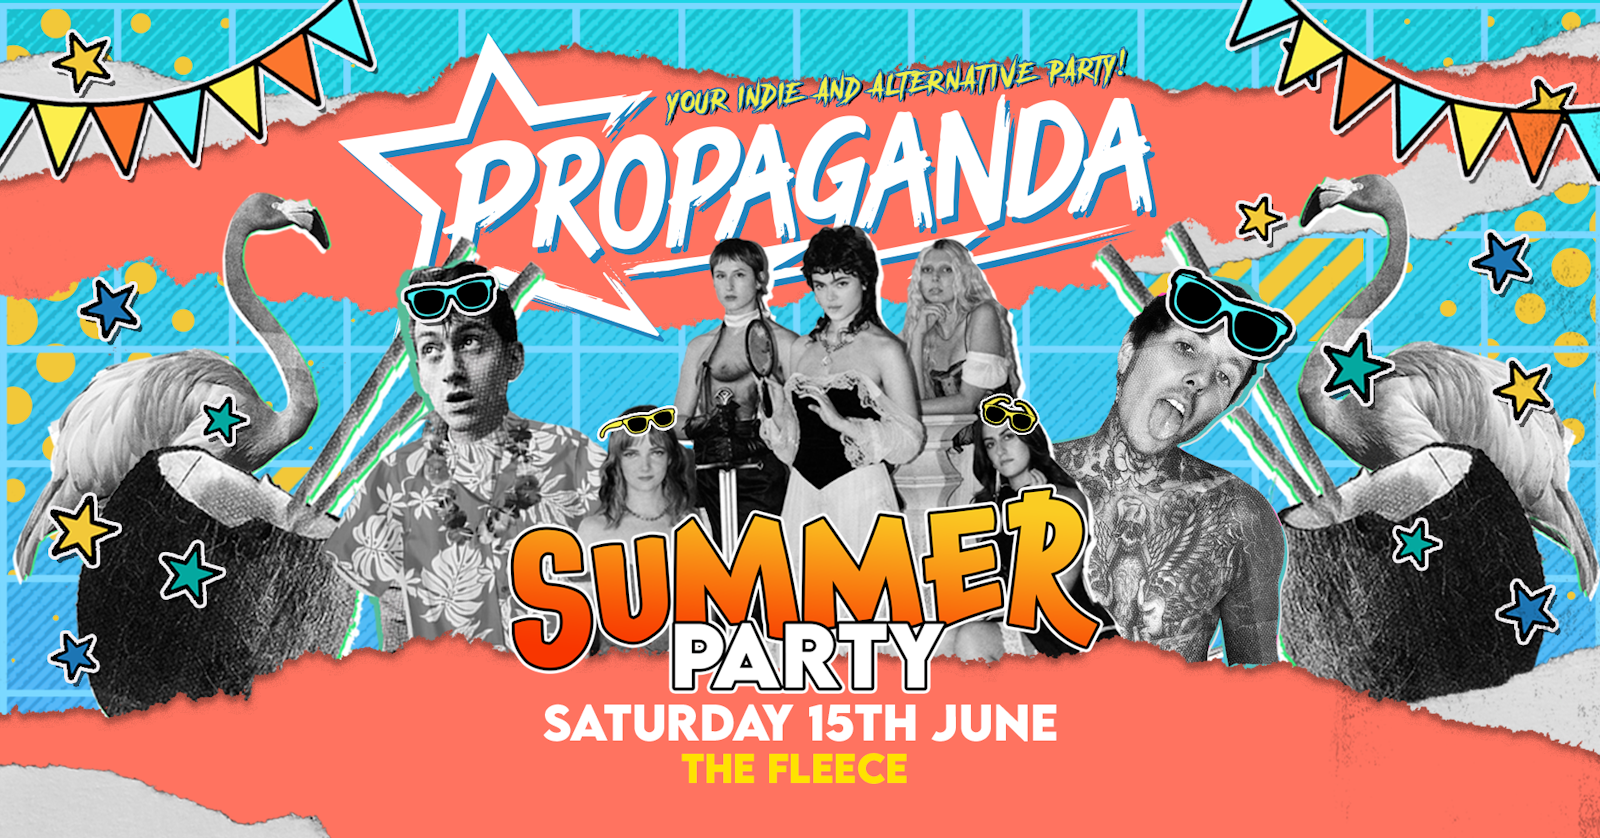 Propaganda Bristol – Your Indie & Alternative Summer Party!